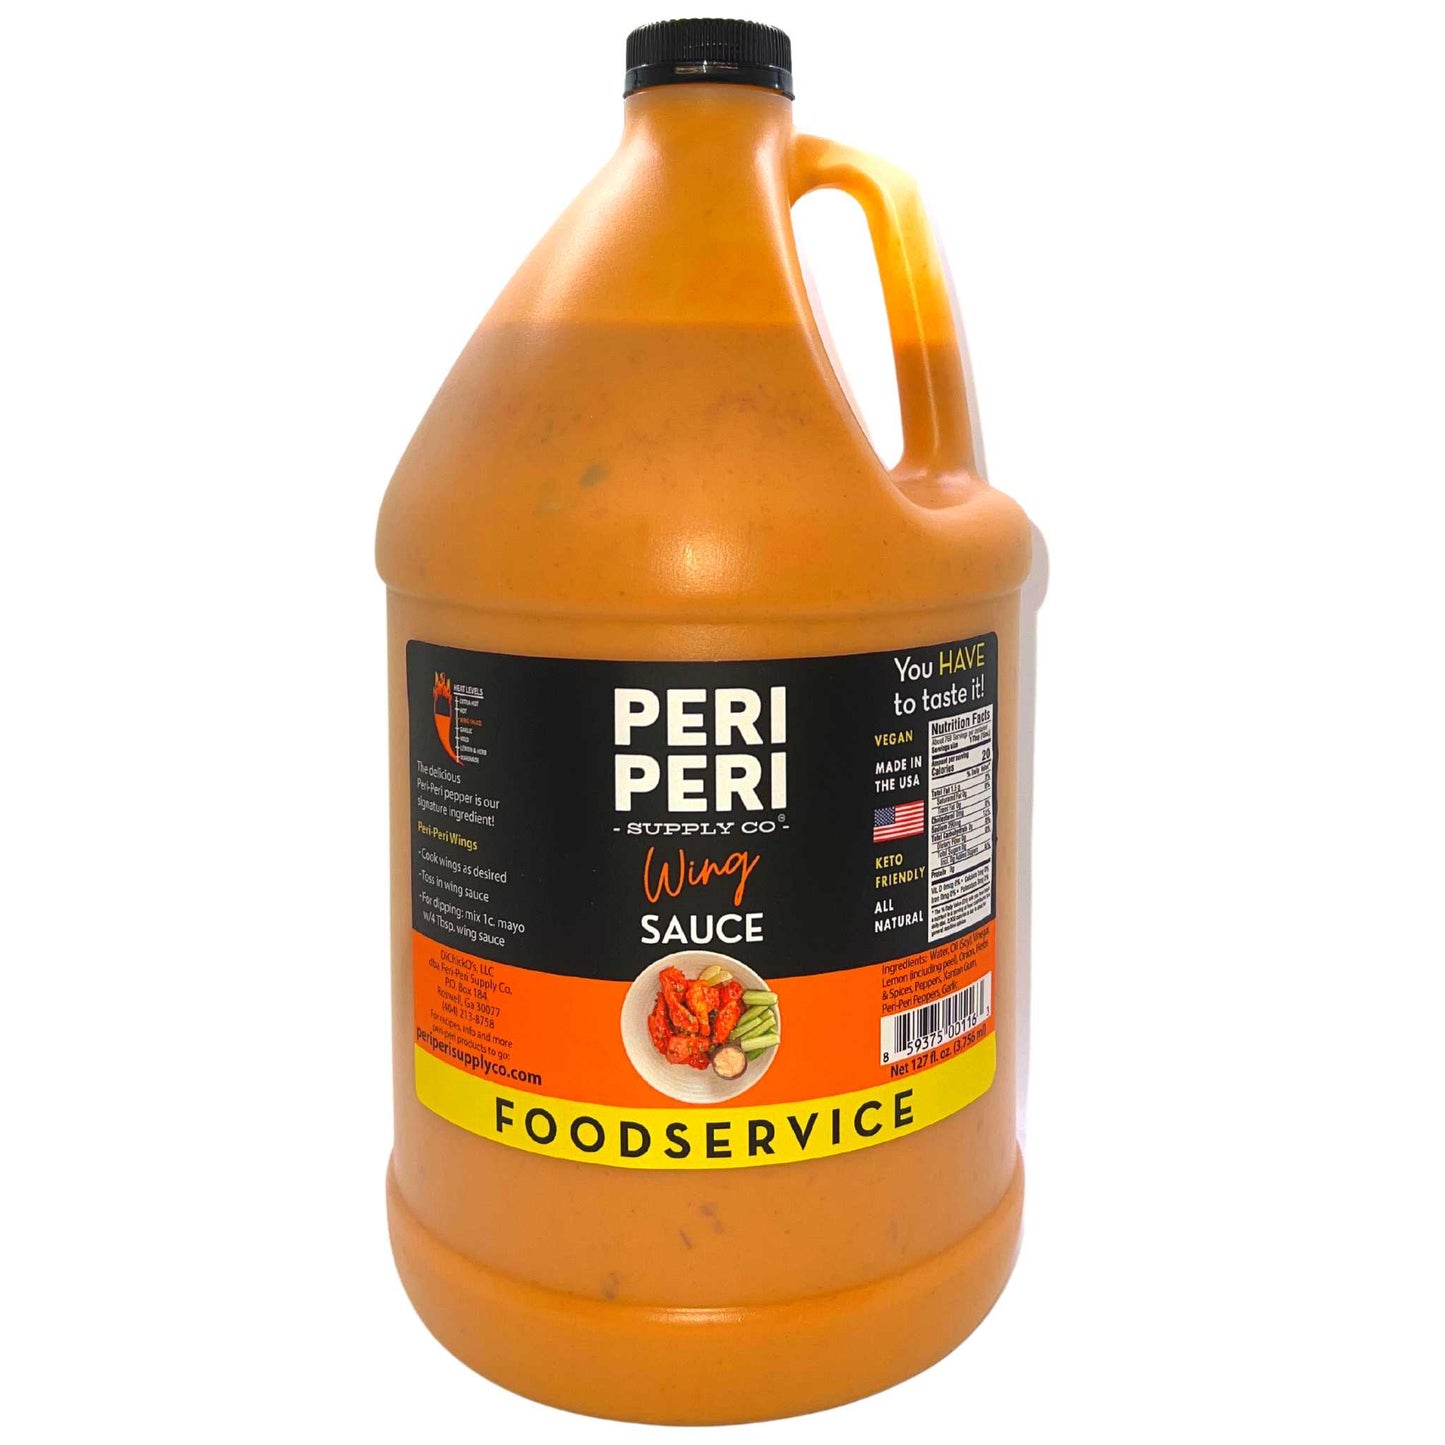 Peri Peri Wing sauce - Medium Heat level - Wholesale 4 Gallons per case, Vegan, Gluten Free, Sugar Free, Made in America, Keto and Paleo Friendly